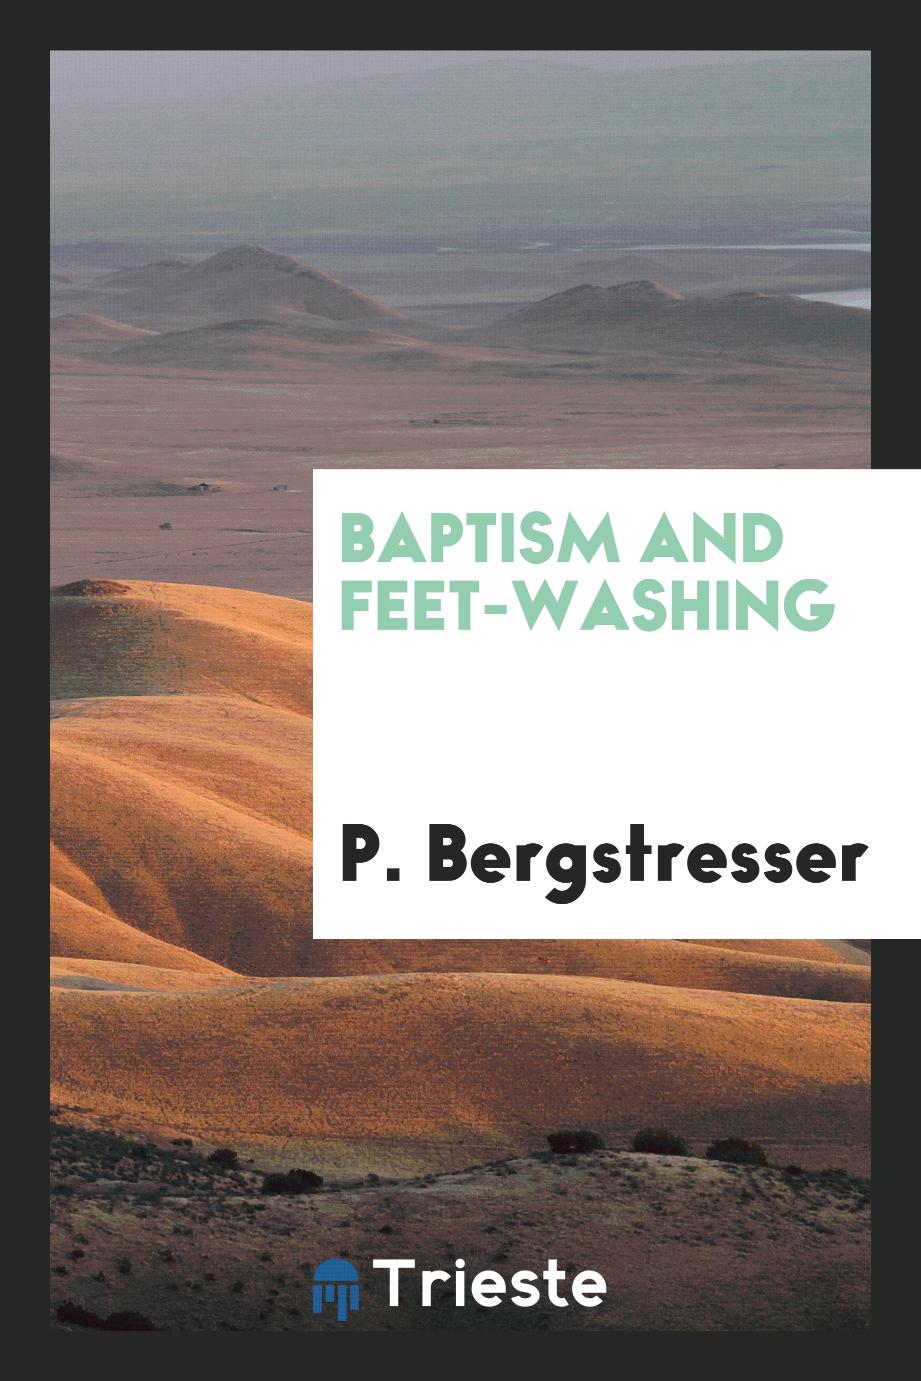 Baptism and feet-washing